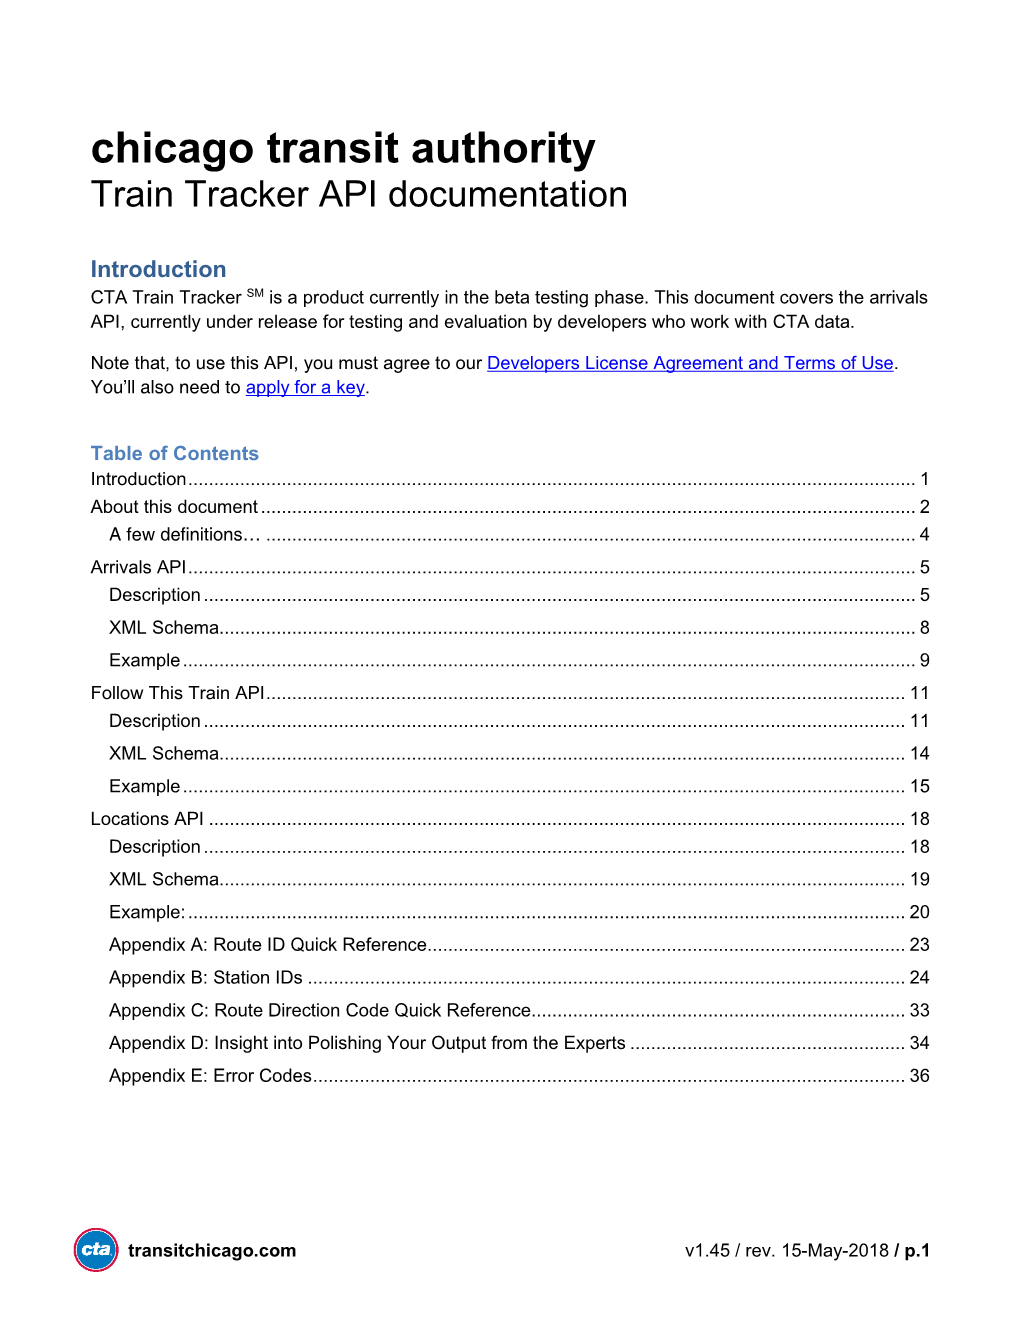 Train Tracker API Documentation